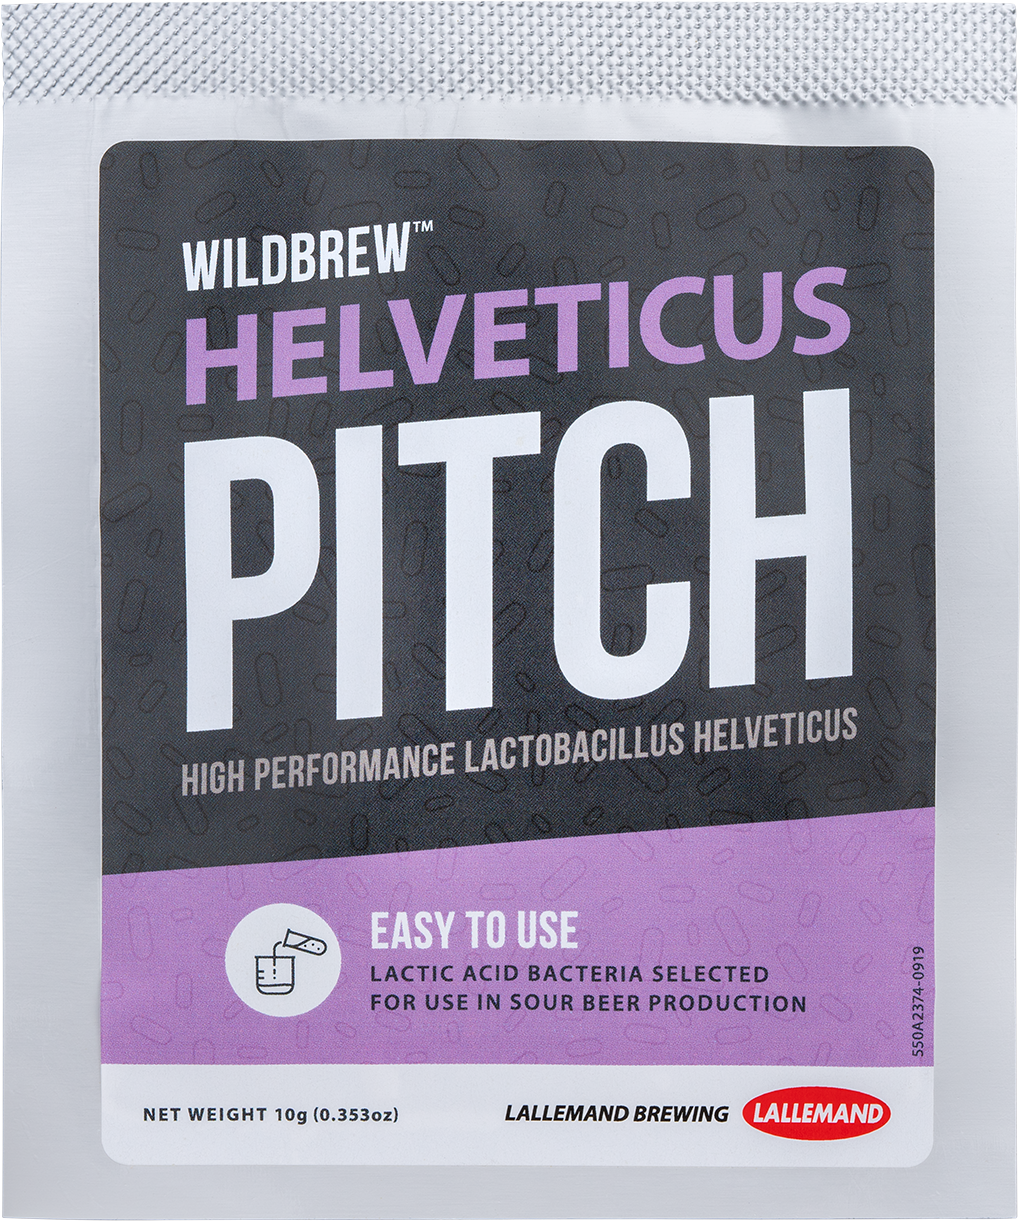 WildBrew Helveticus Pitch™